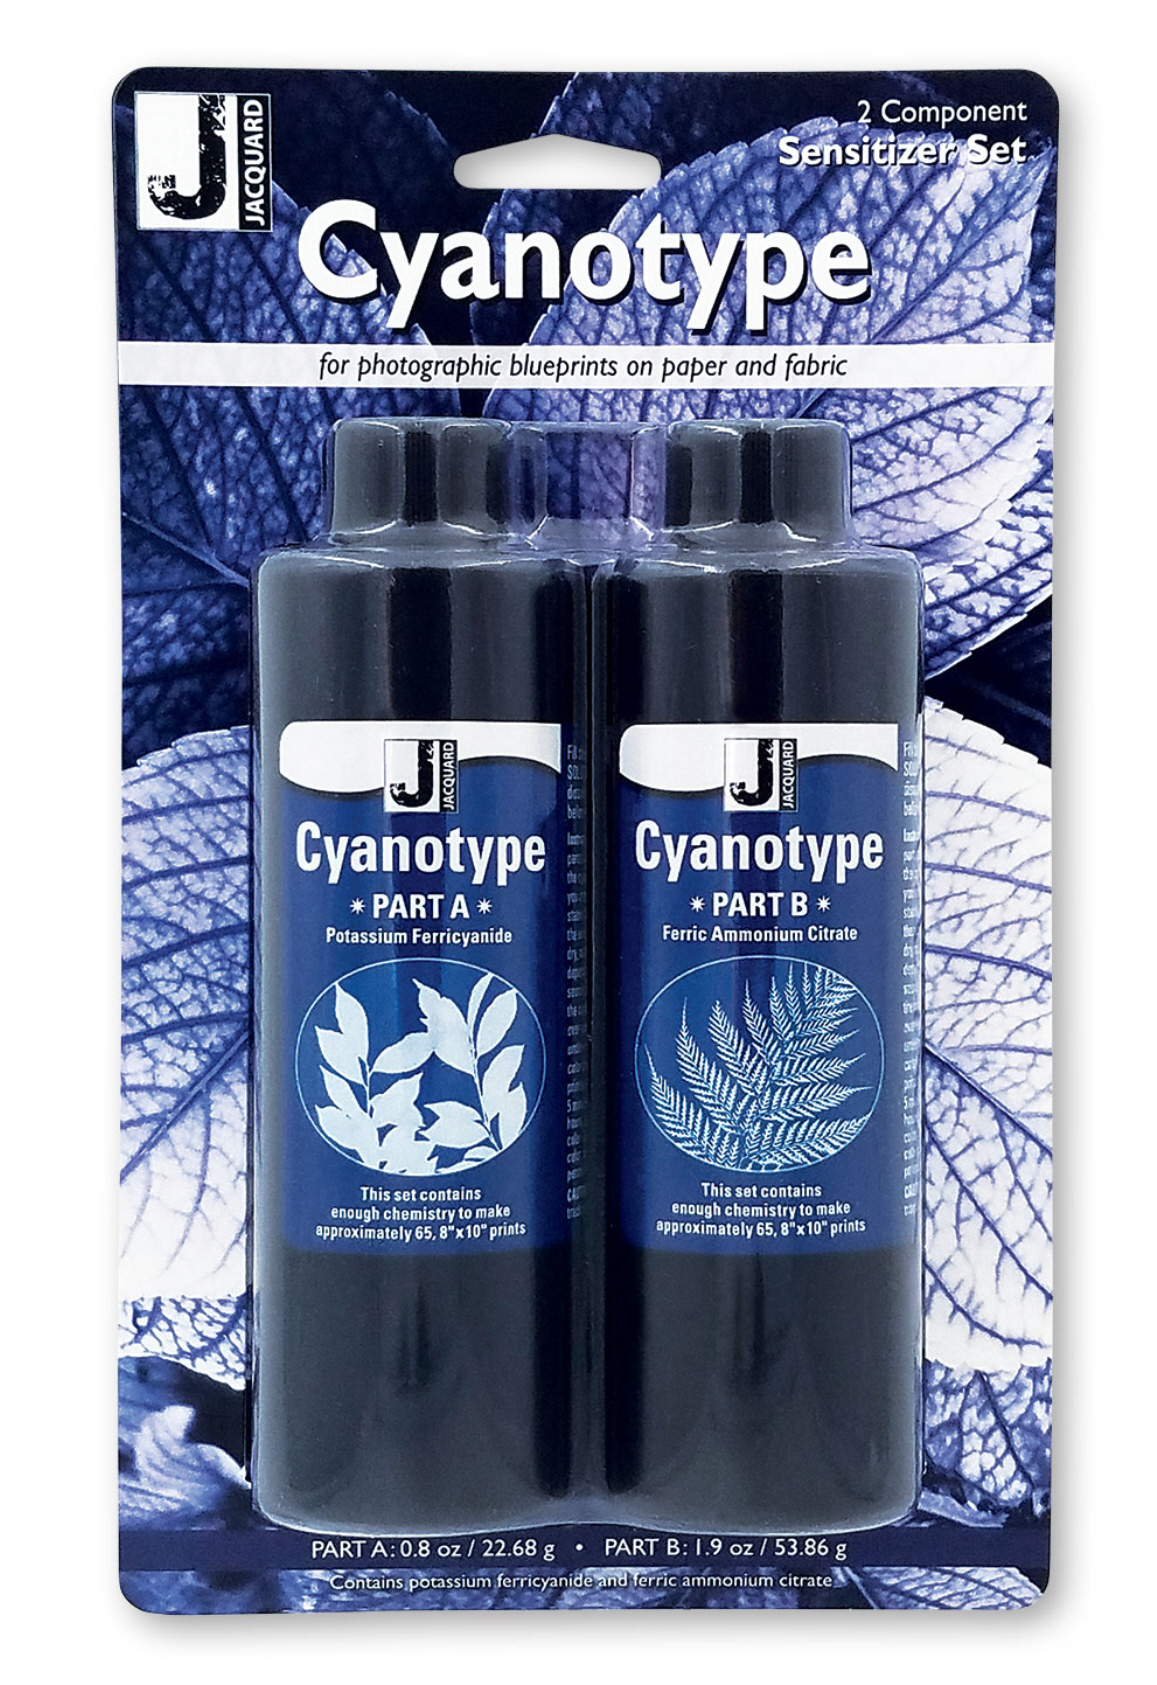 Cyanotype Blueprint Sensitizer Set 2 Komponenten 